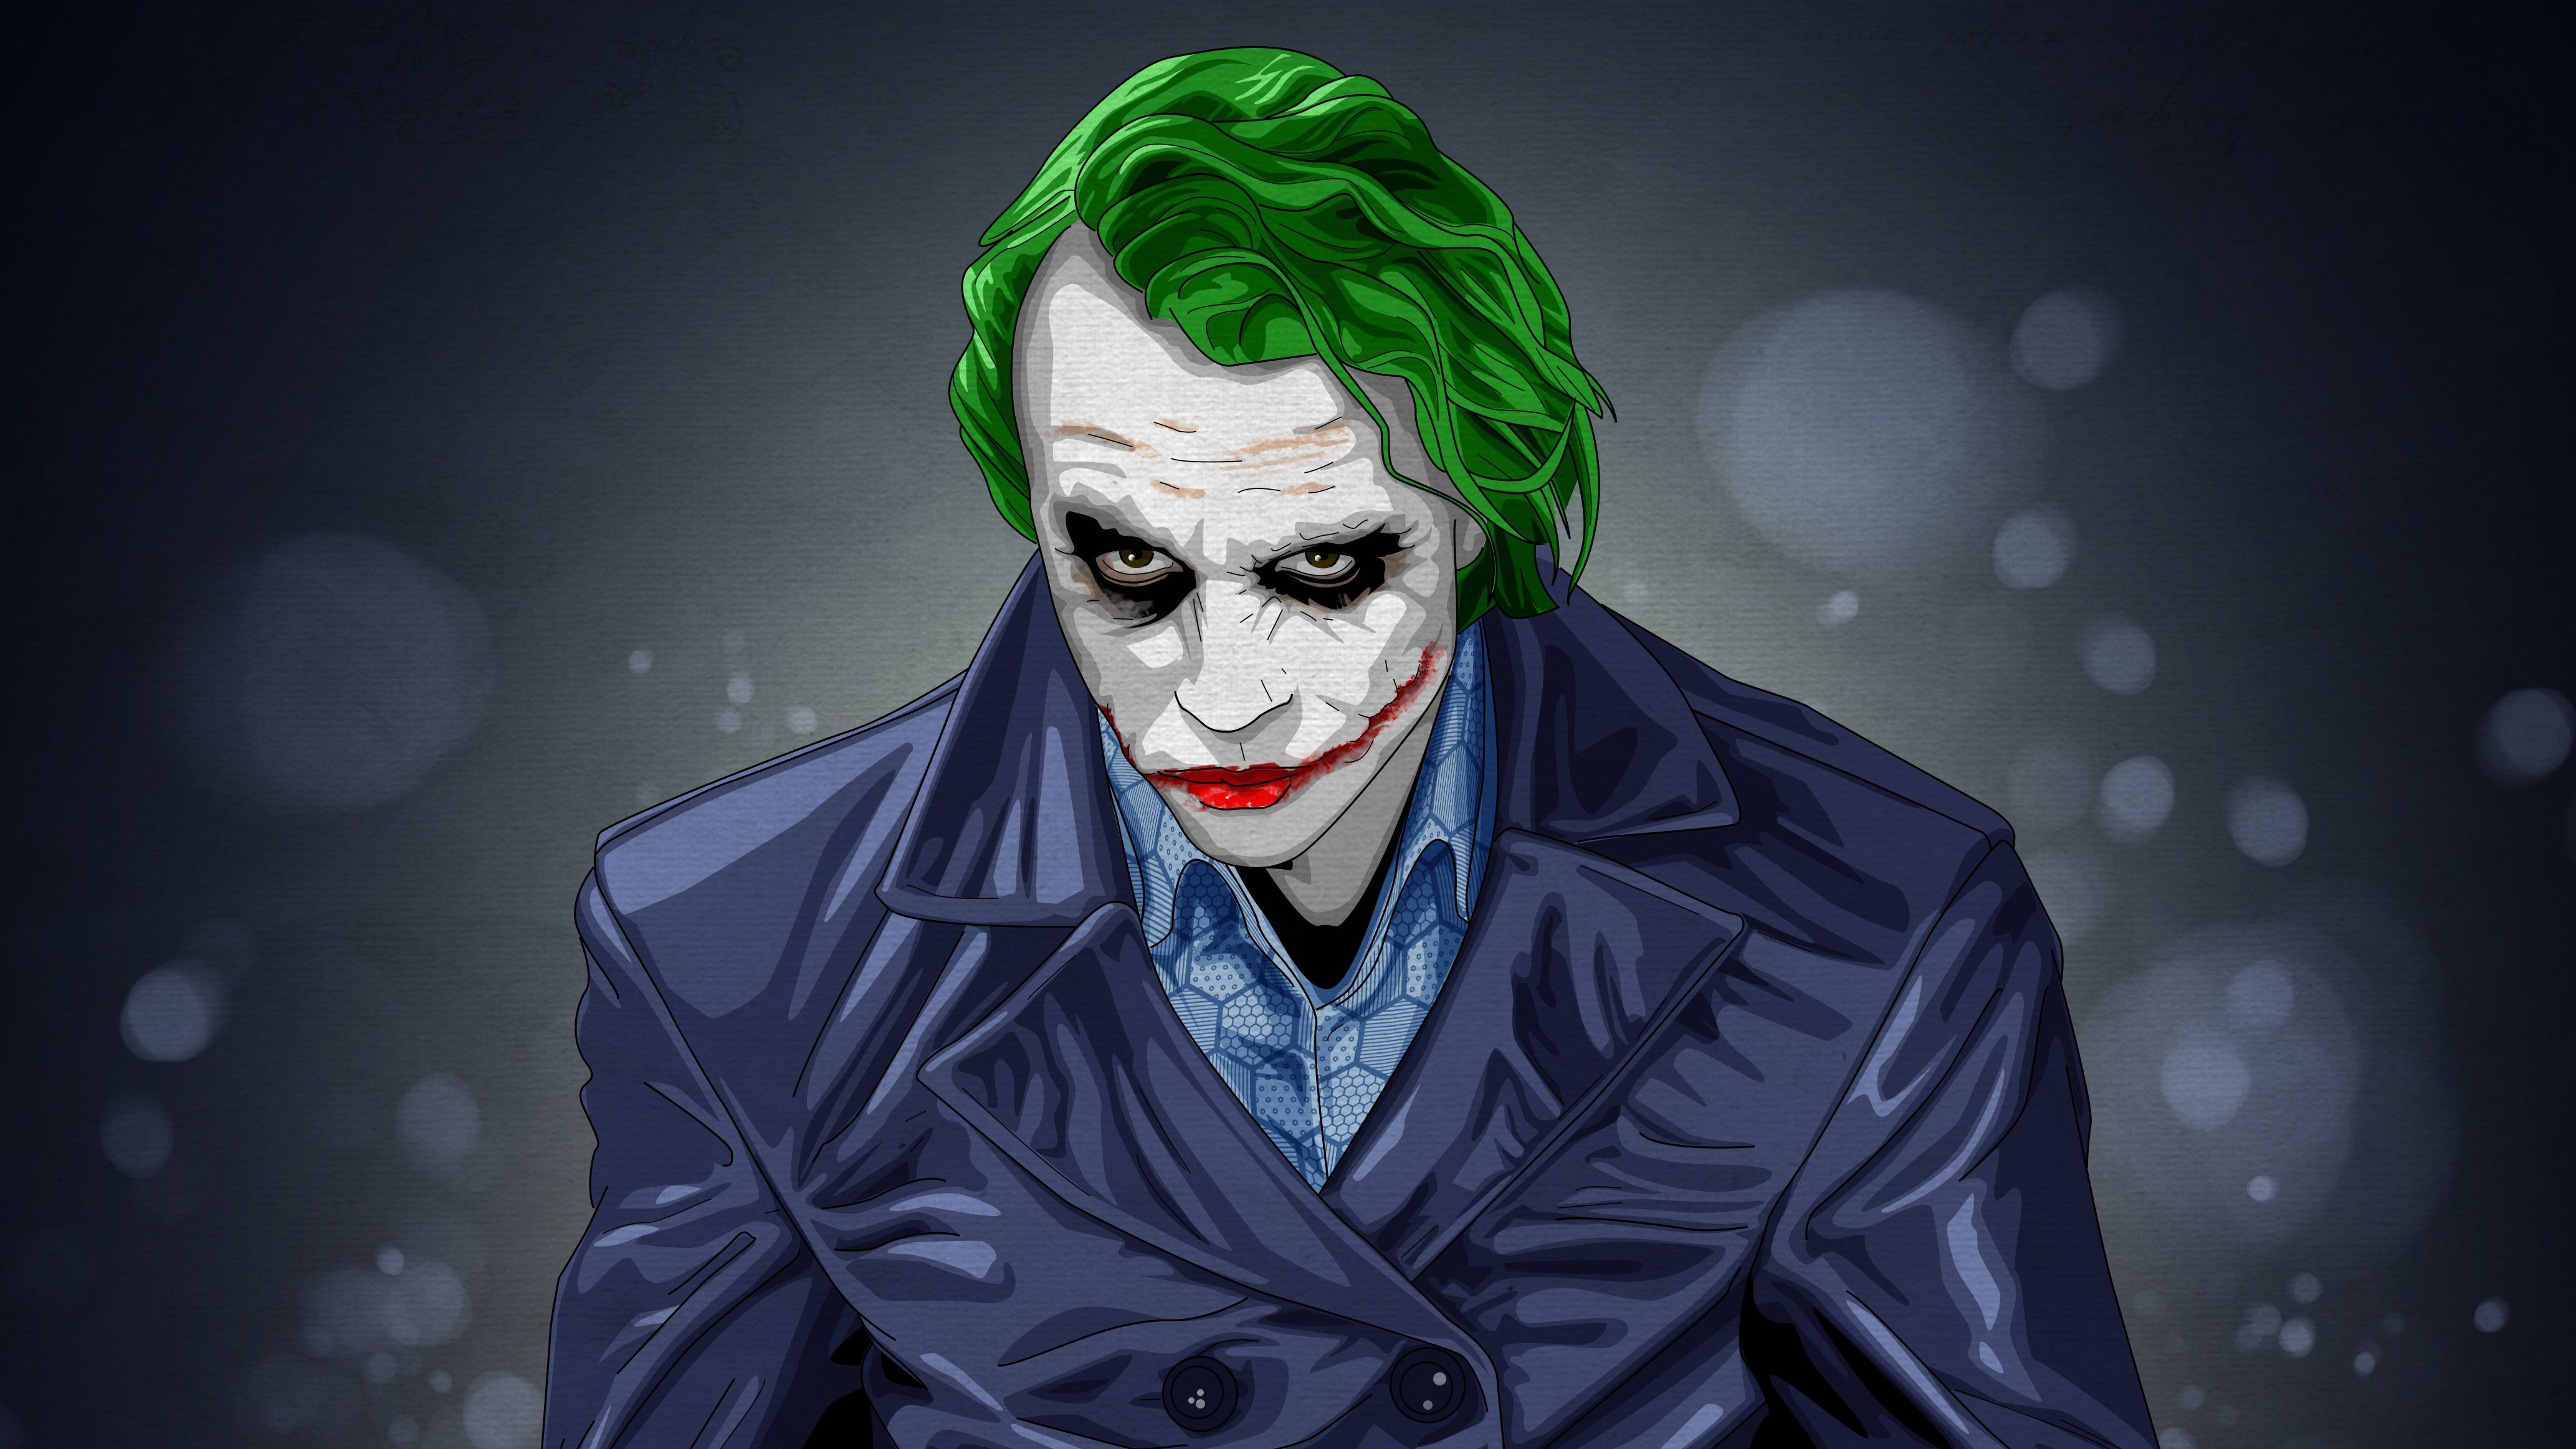 Joker art. Джокер клоун принц Готэма.